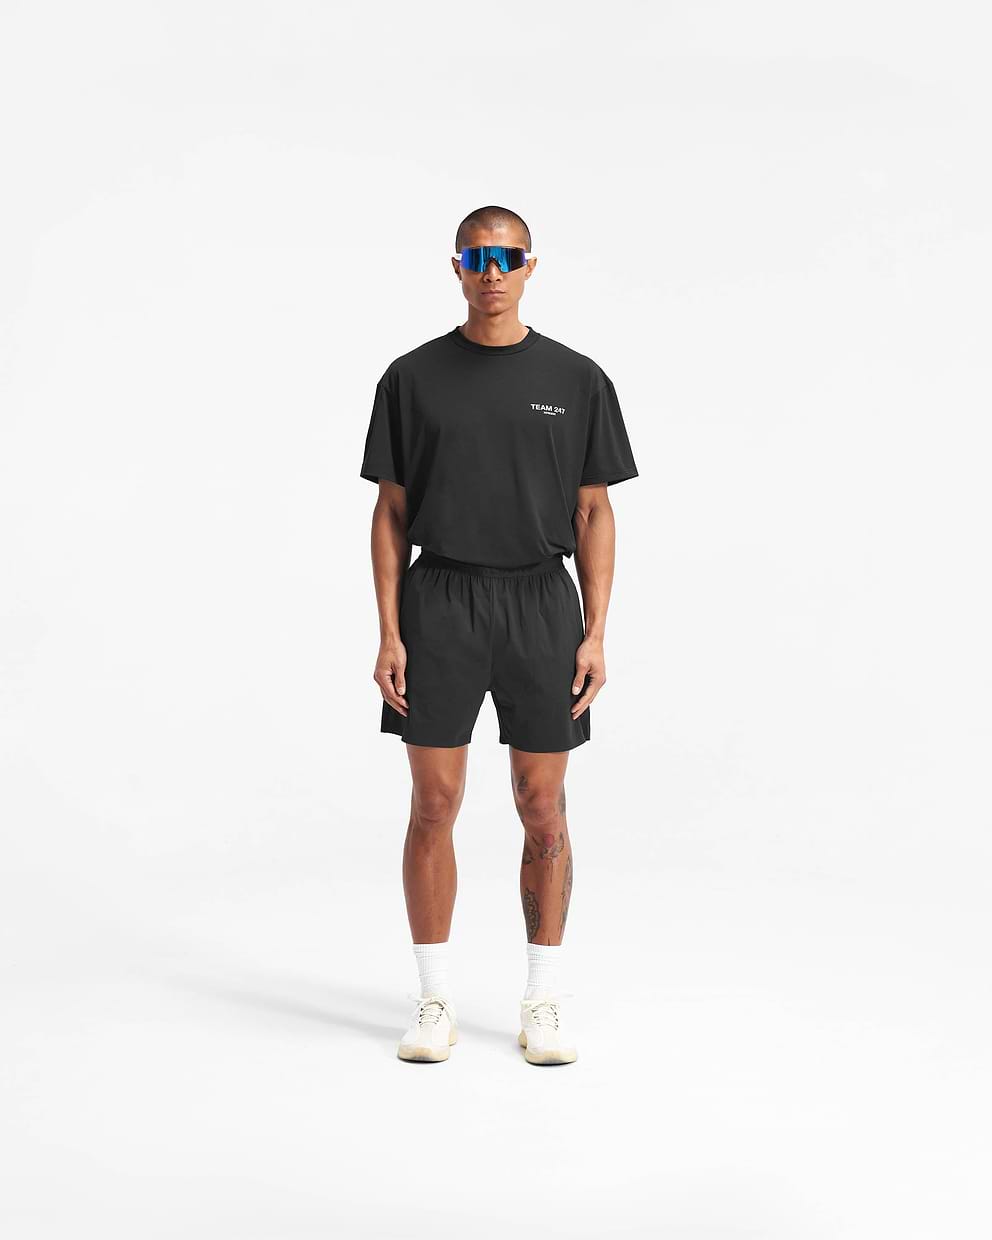 Team 247 Fused Shorts - Black